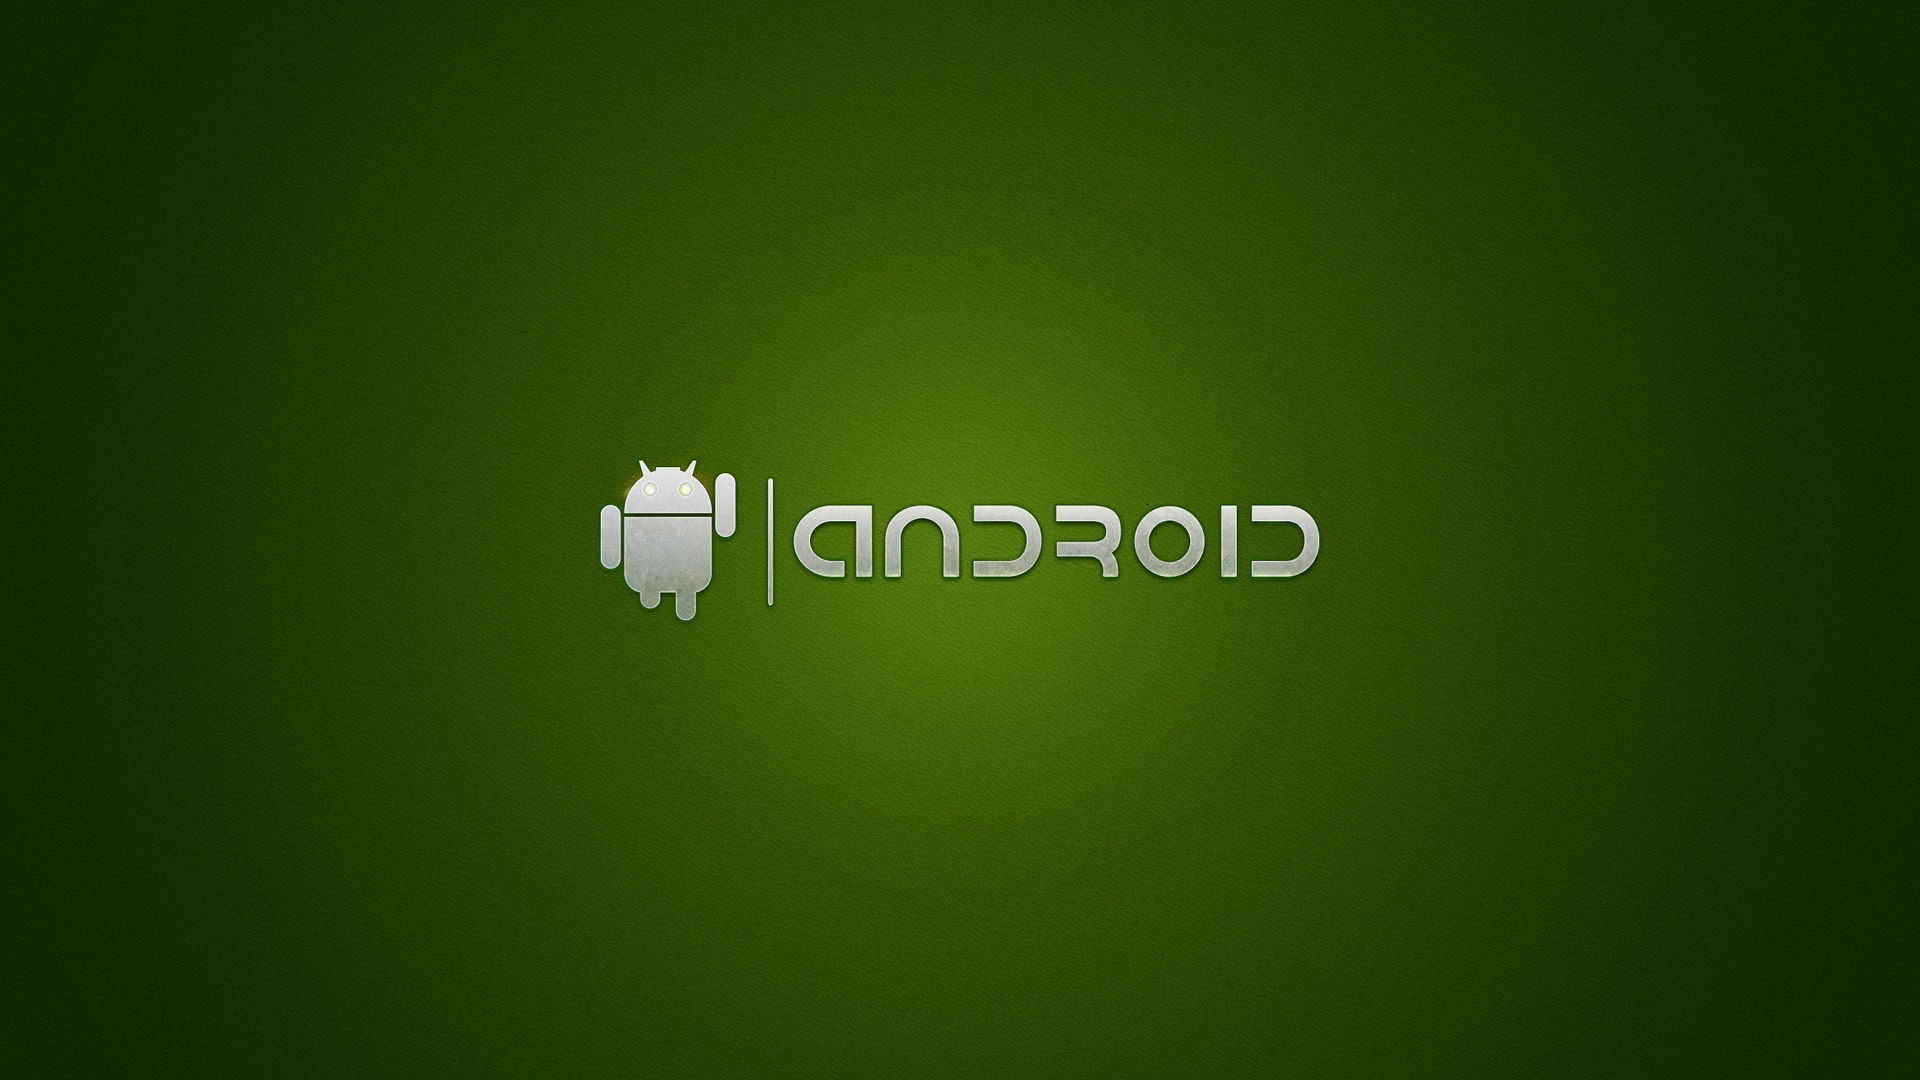  500 fondos de pantalla en Full HD para tu Android   El Androide Libre